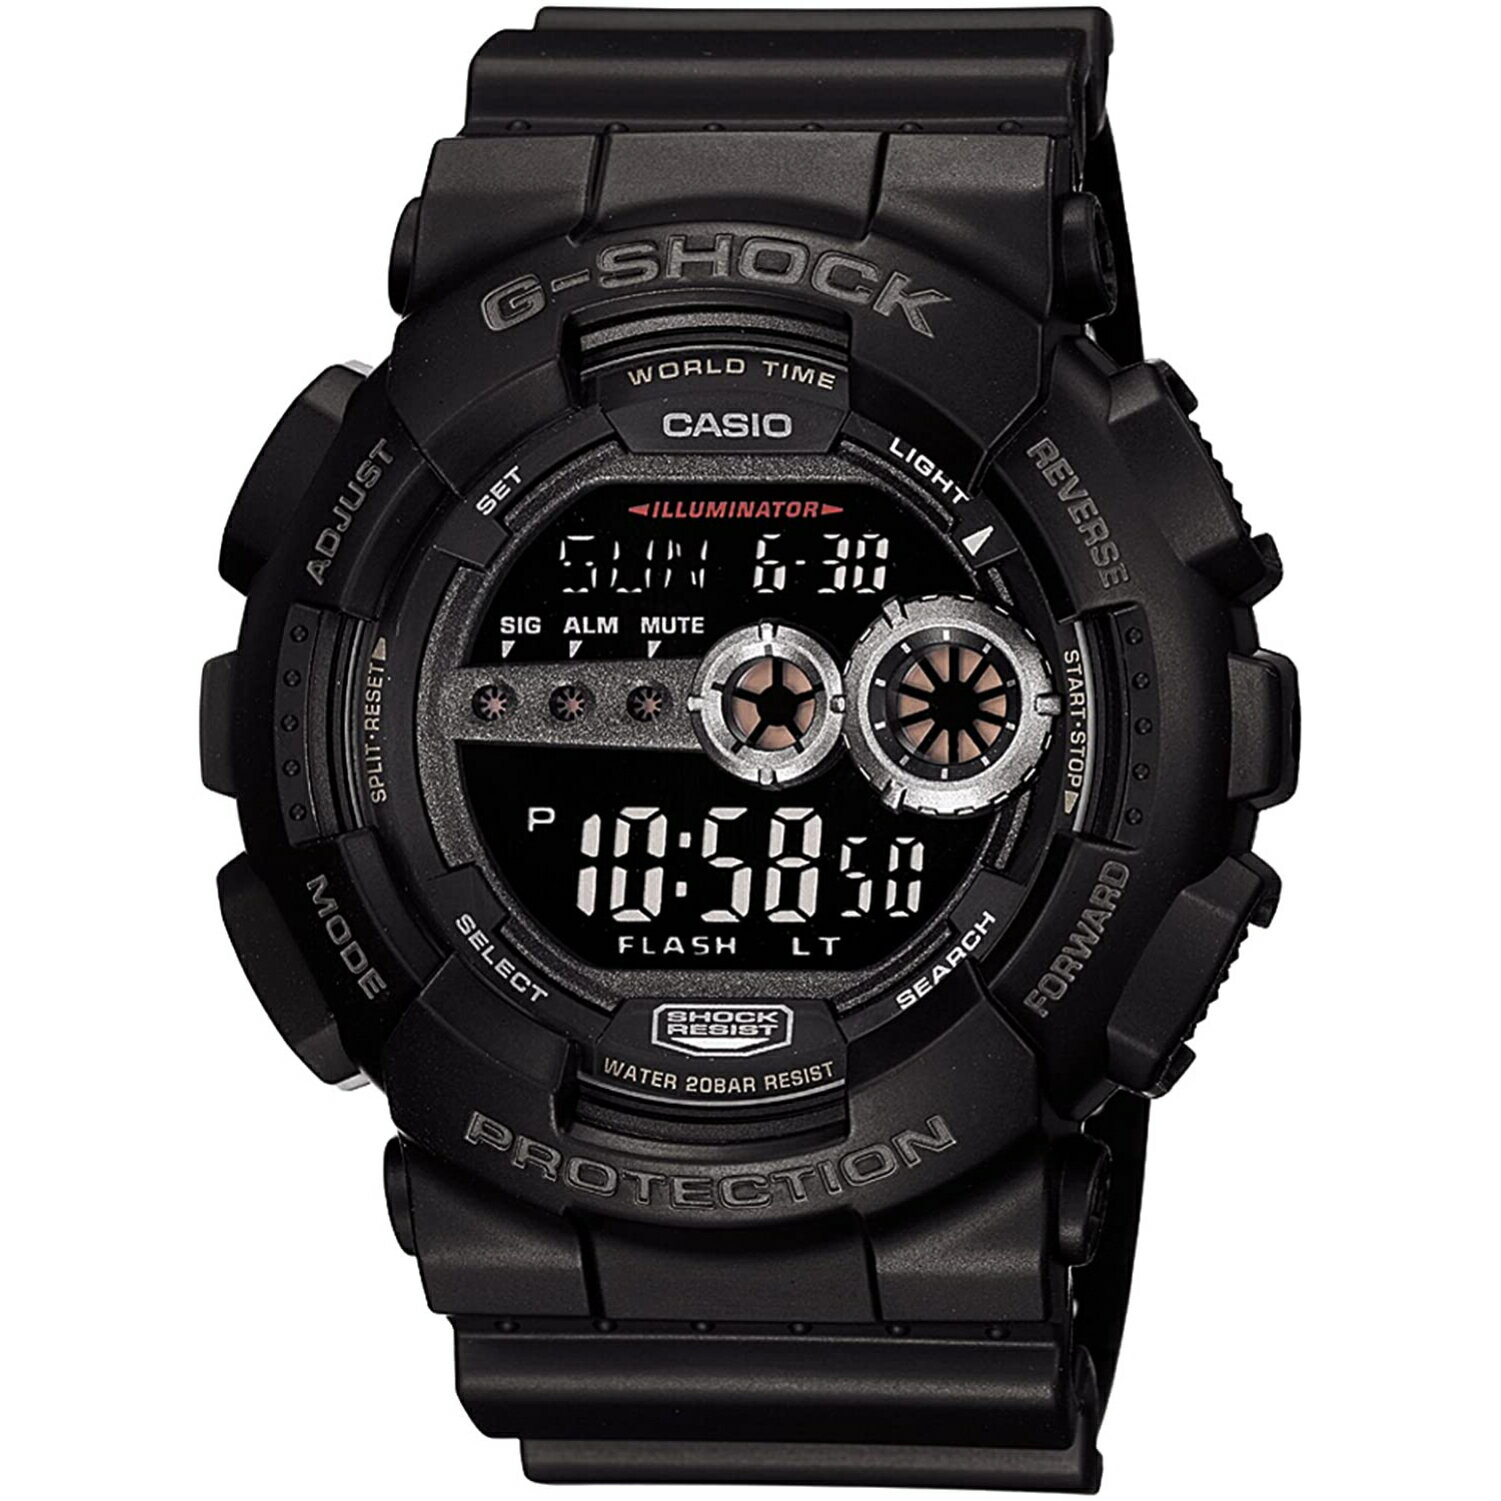 CASIO カシオ G-SHOCK ジーショック Gショック 腕時計 時計 メンズ デジタル 定番 防水 カジュアル アウトドア スポーツ ブラック 黒 オールブラック 黒 GD-100-1B